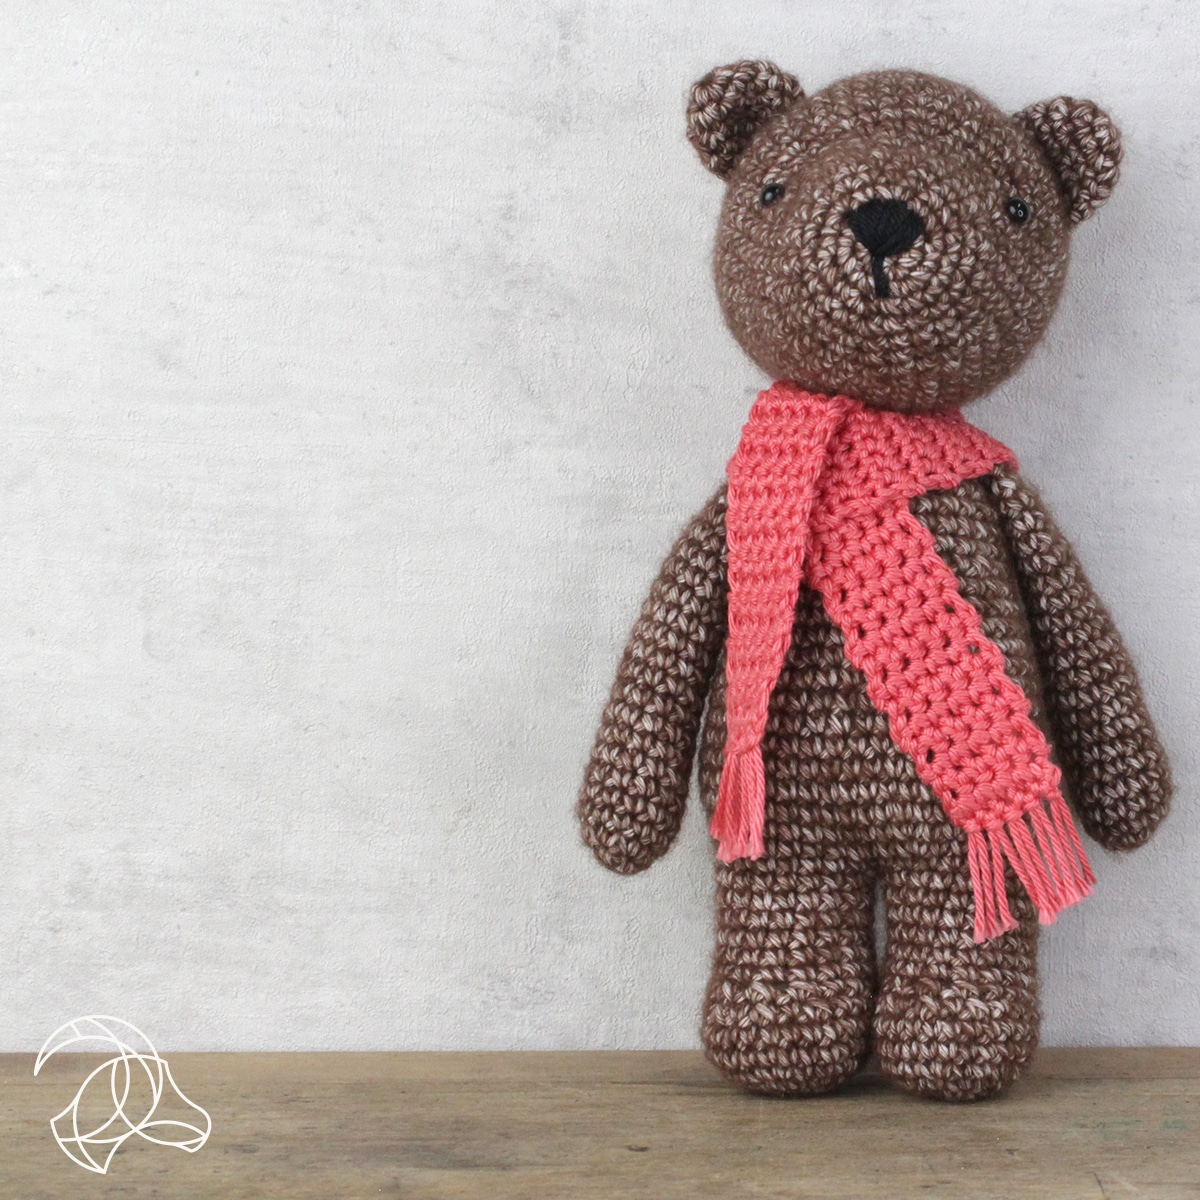 Bobbi Bear Crochet Kit by Hardicraft